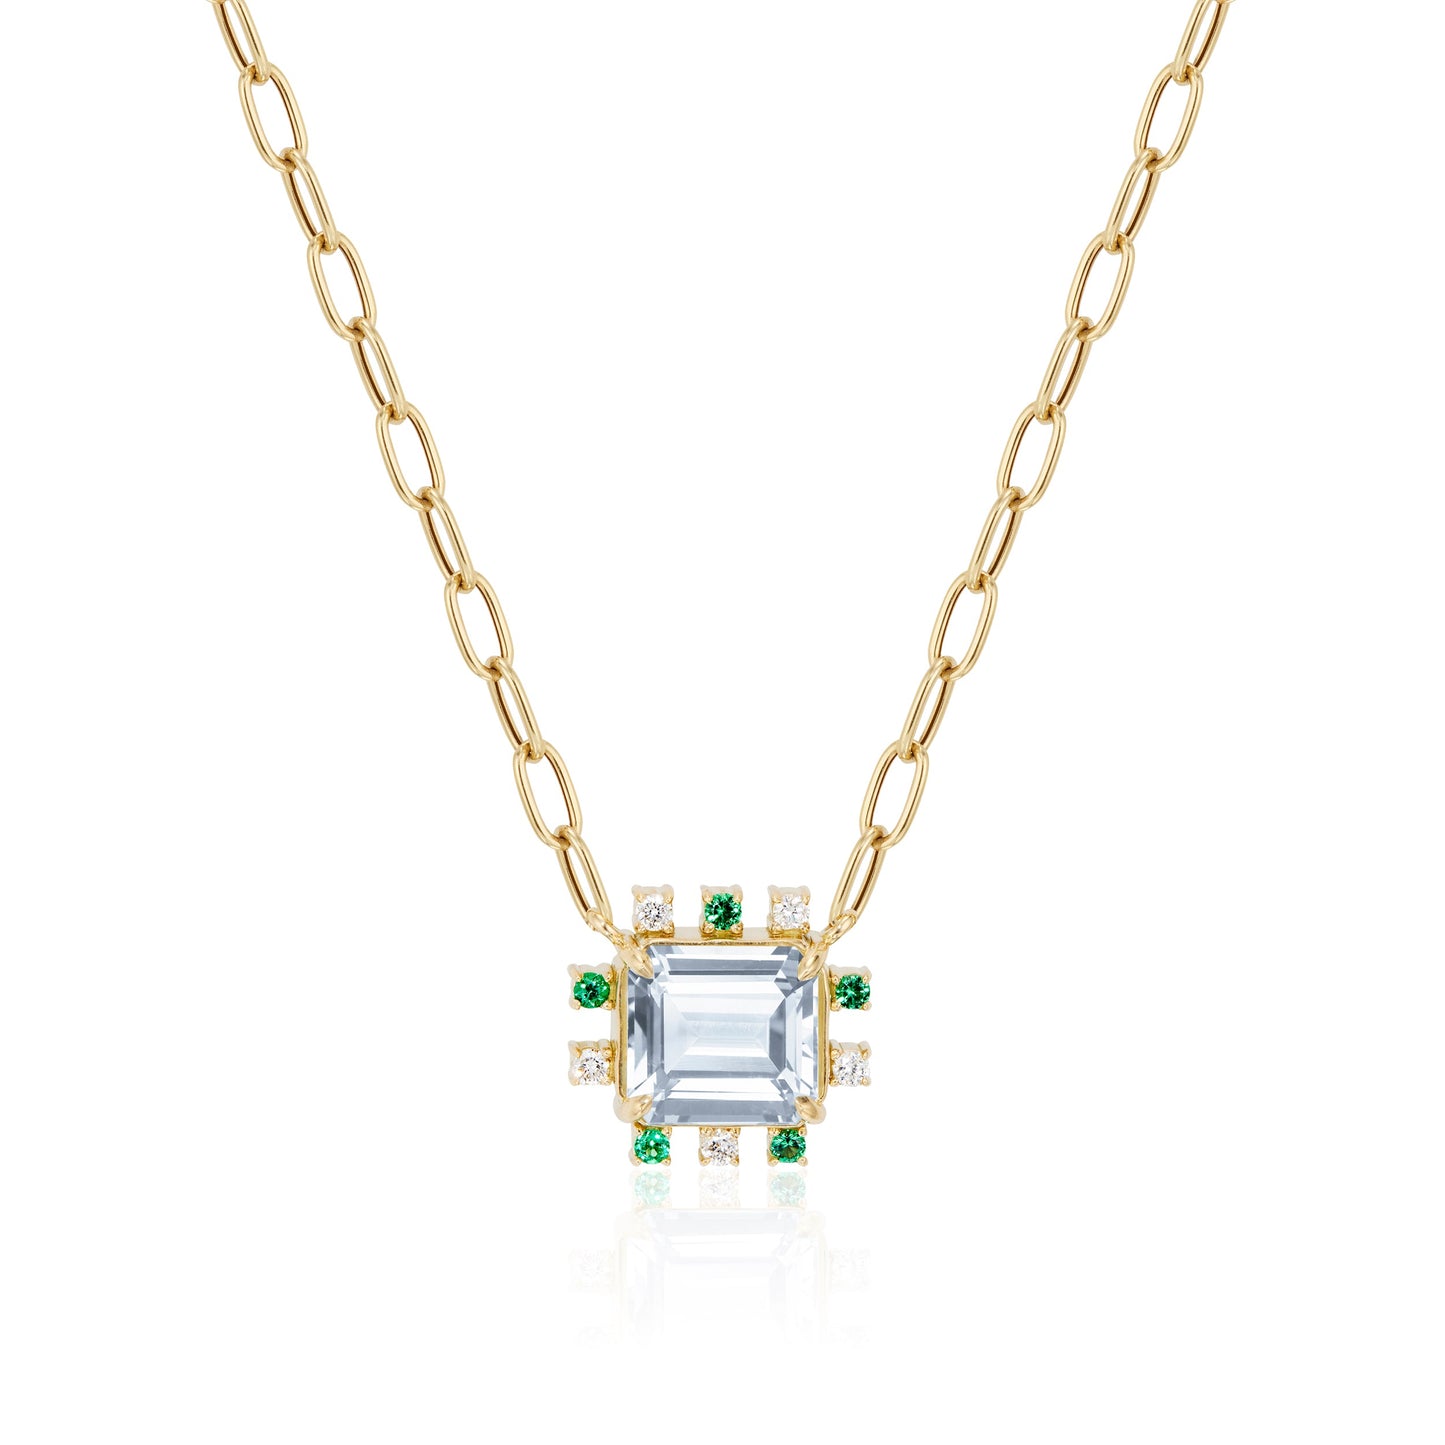 Floating Gemstone Pendant Necklace with Emeralds and Diamonds